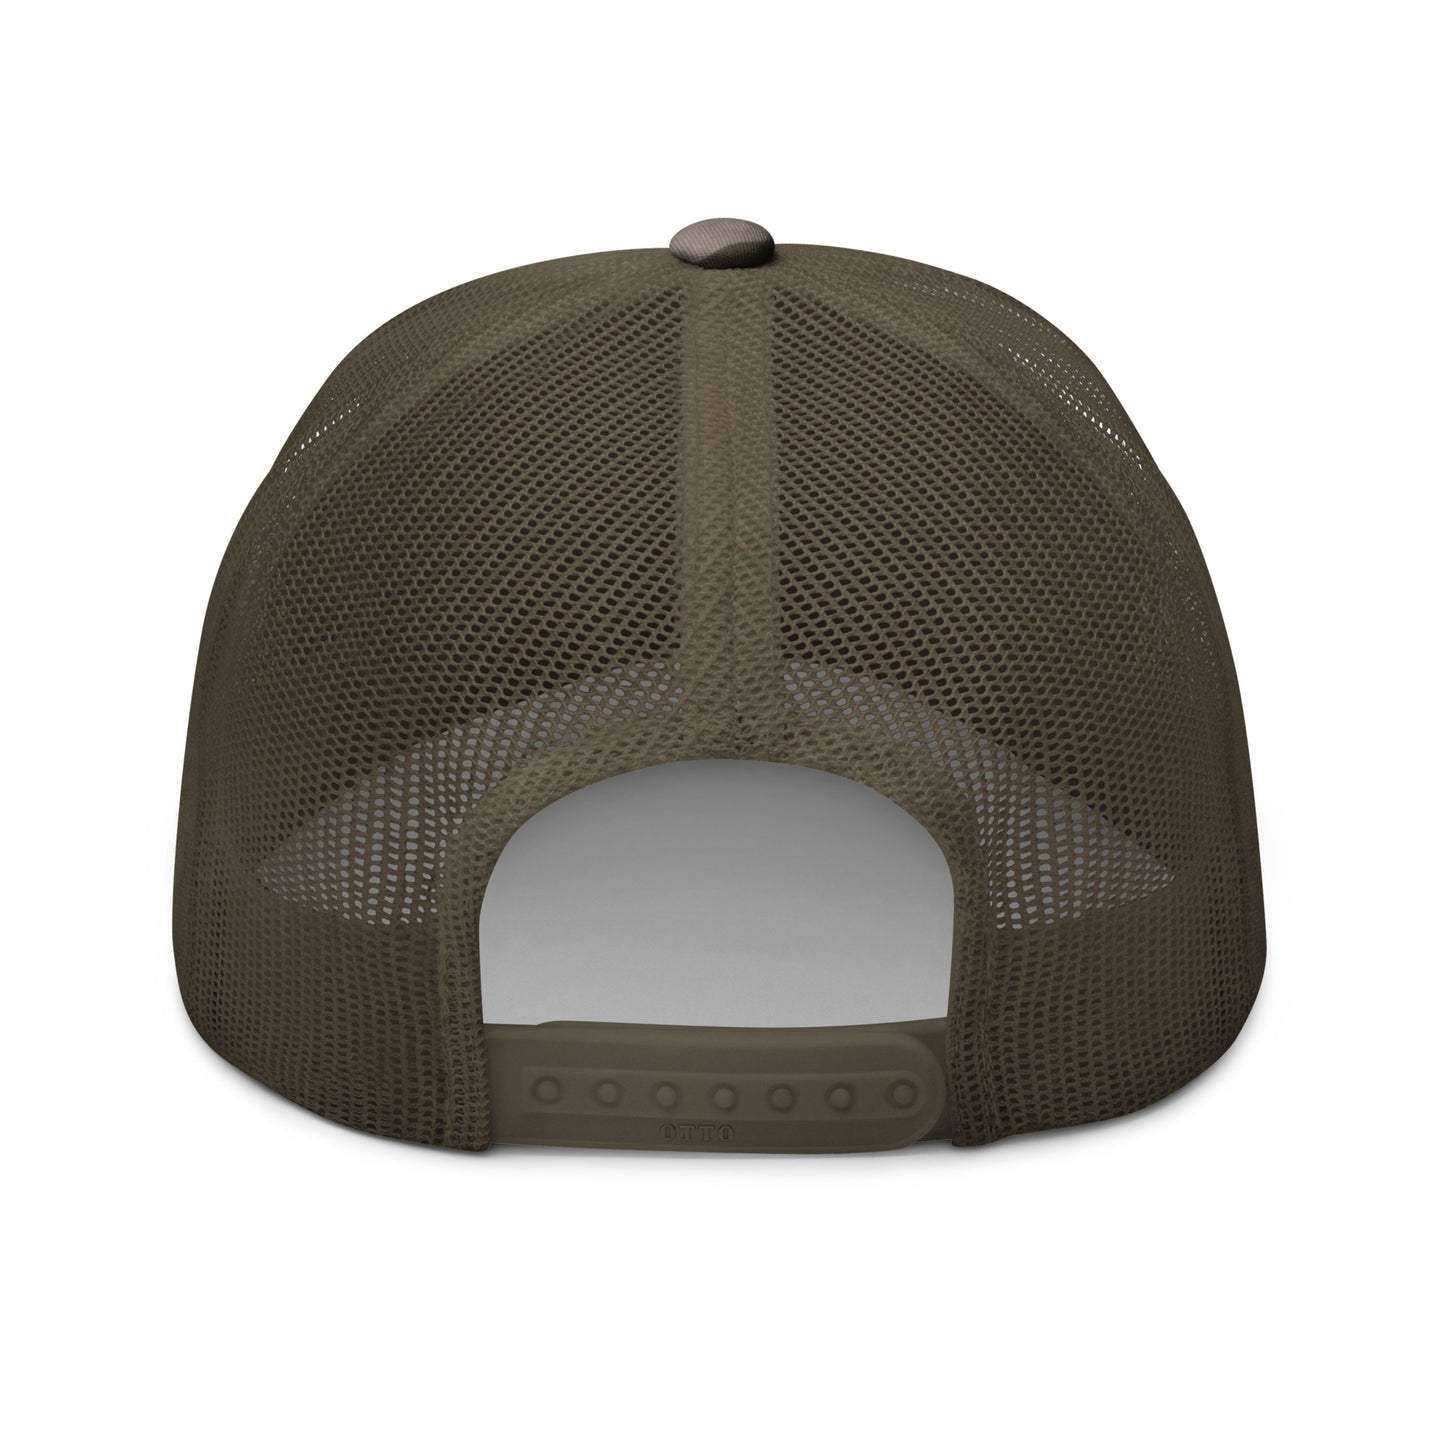 Handi-Capable Camouflage trucker hat